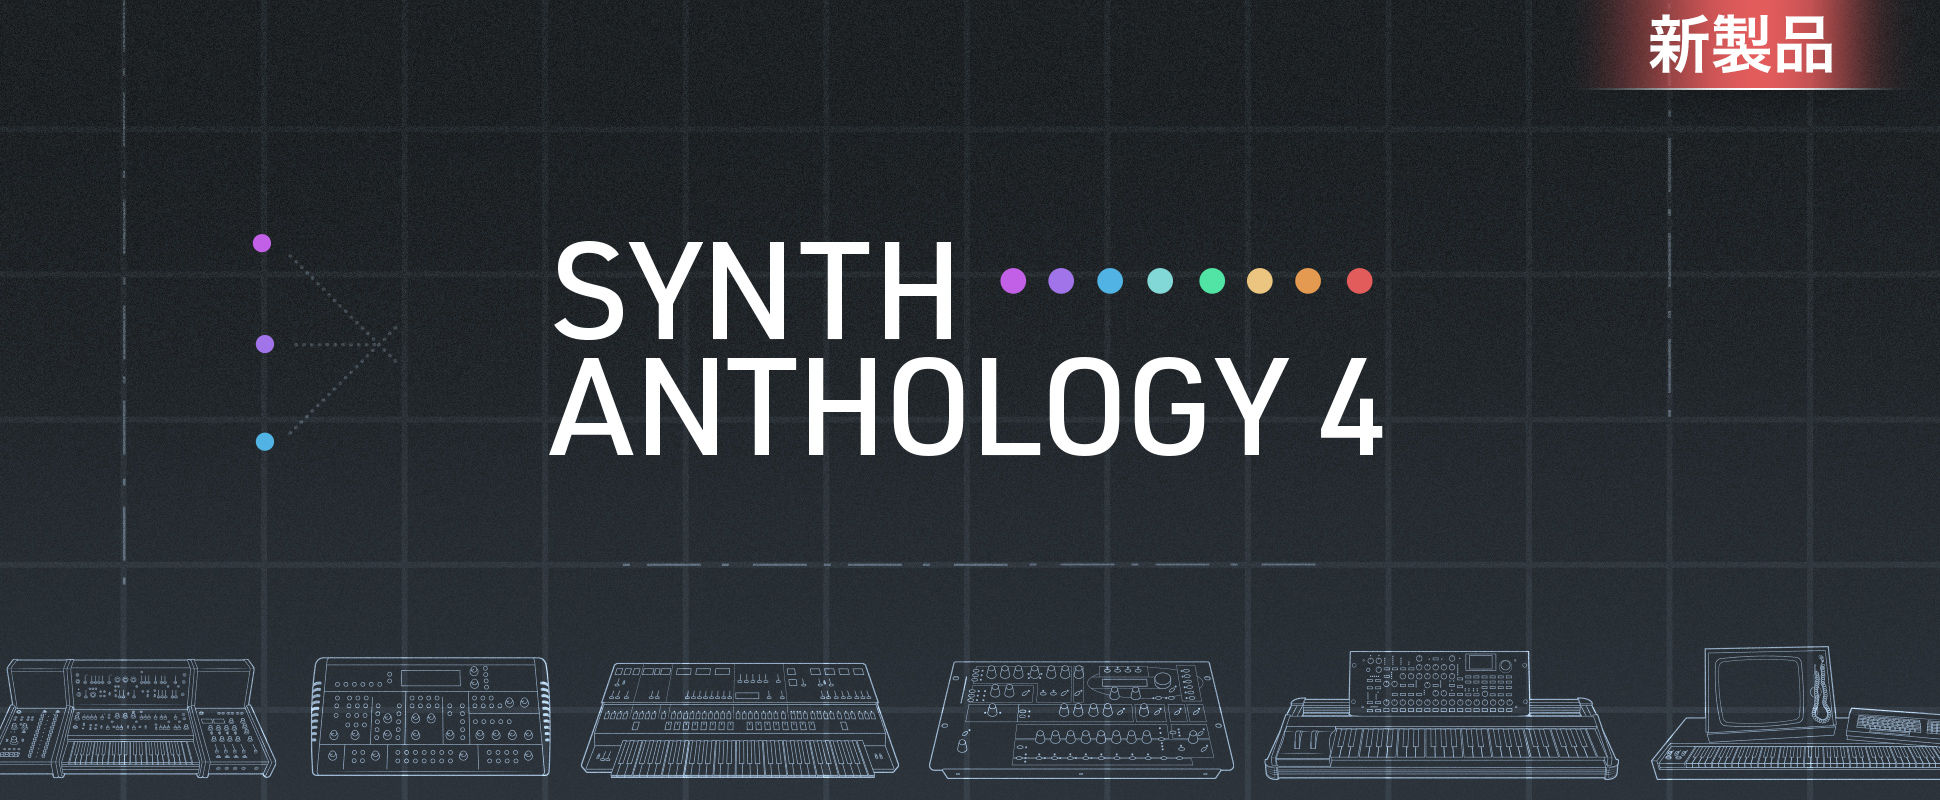 Synth Anthology 4 - New